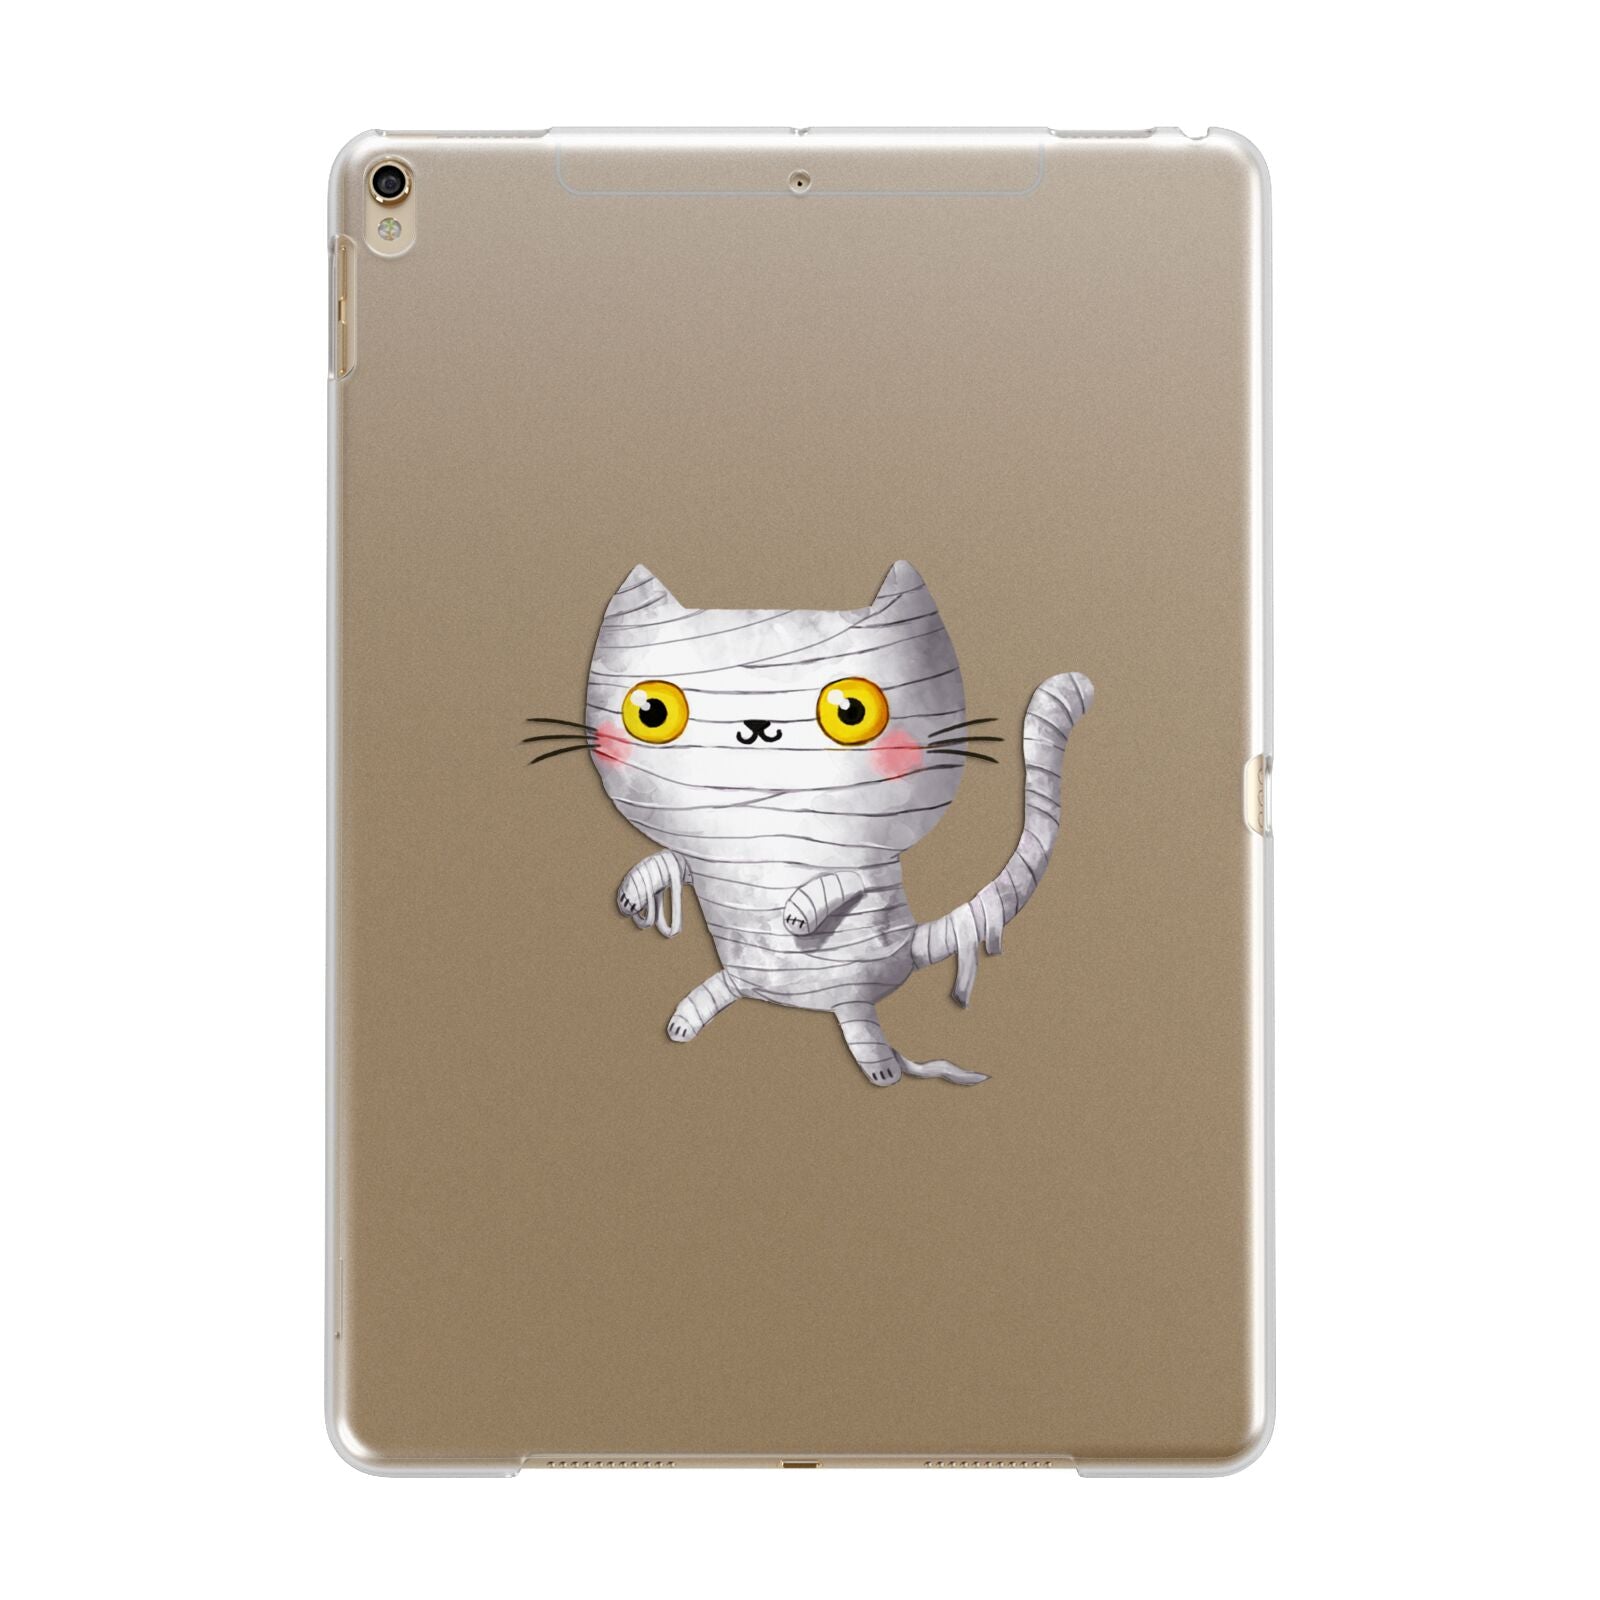 Mummy Cats Apple iPad Gold Case